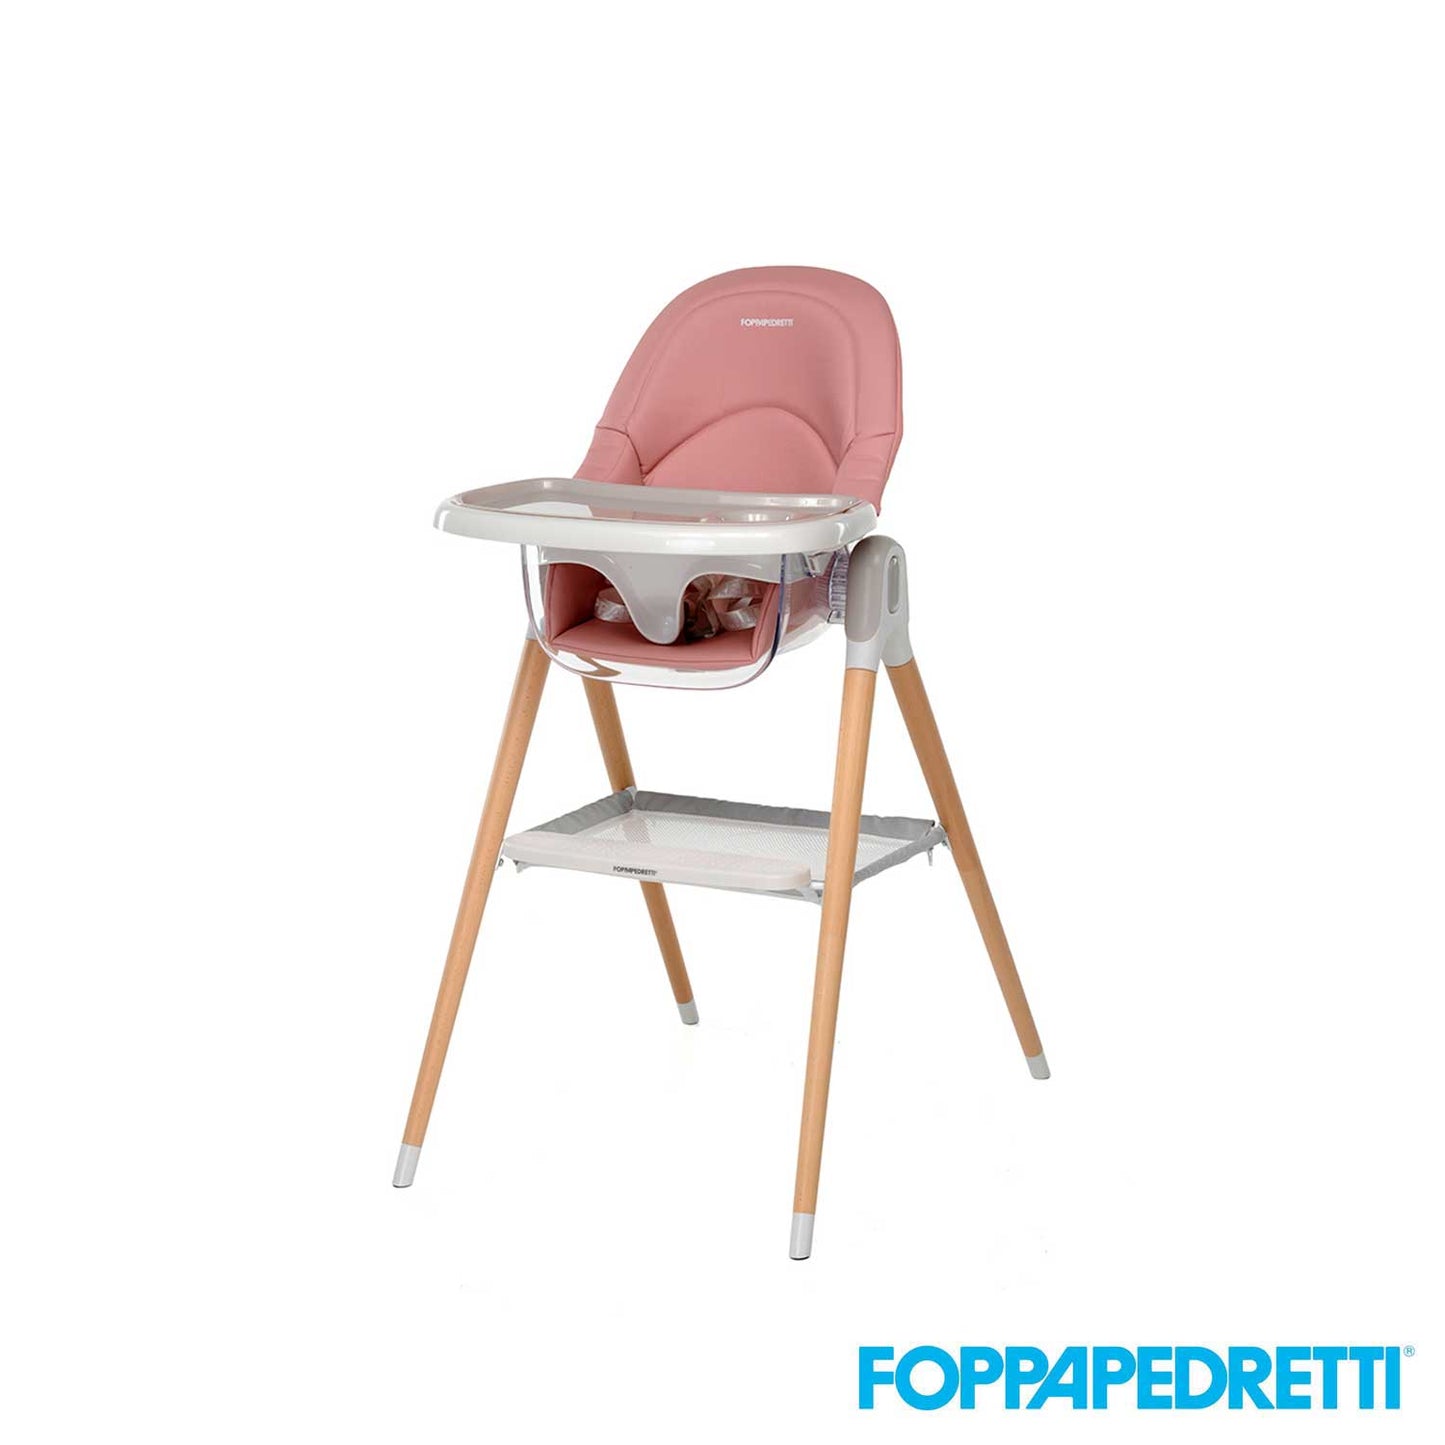 Foppapedretti - Bonito 2 in 1 high chair